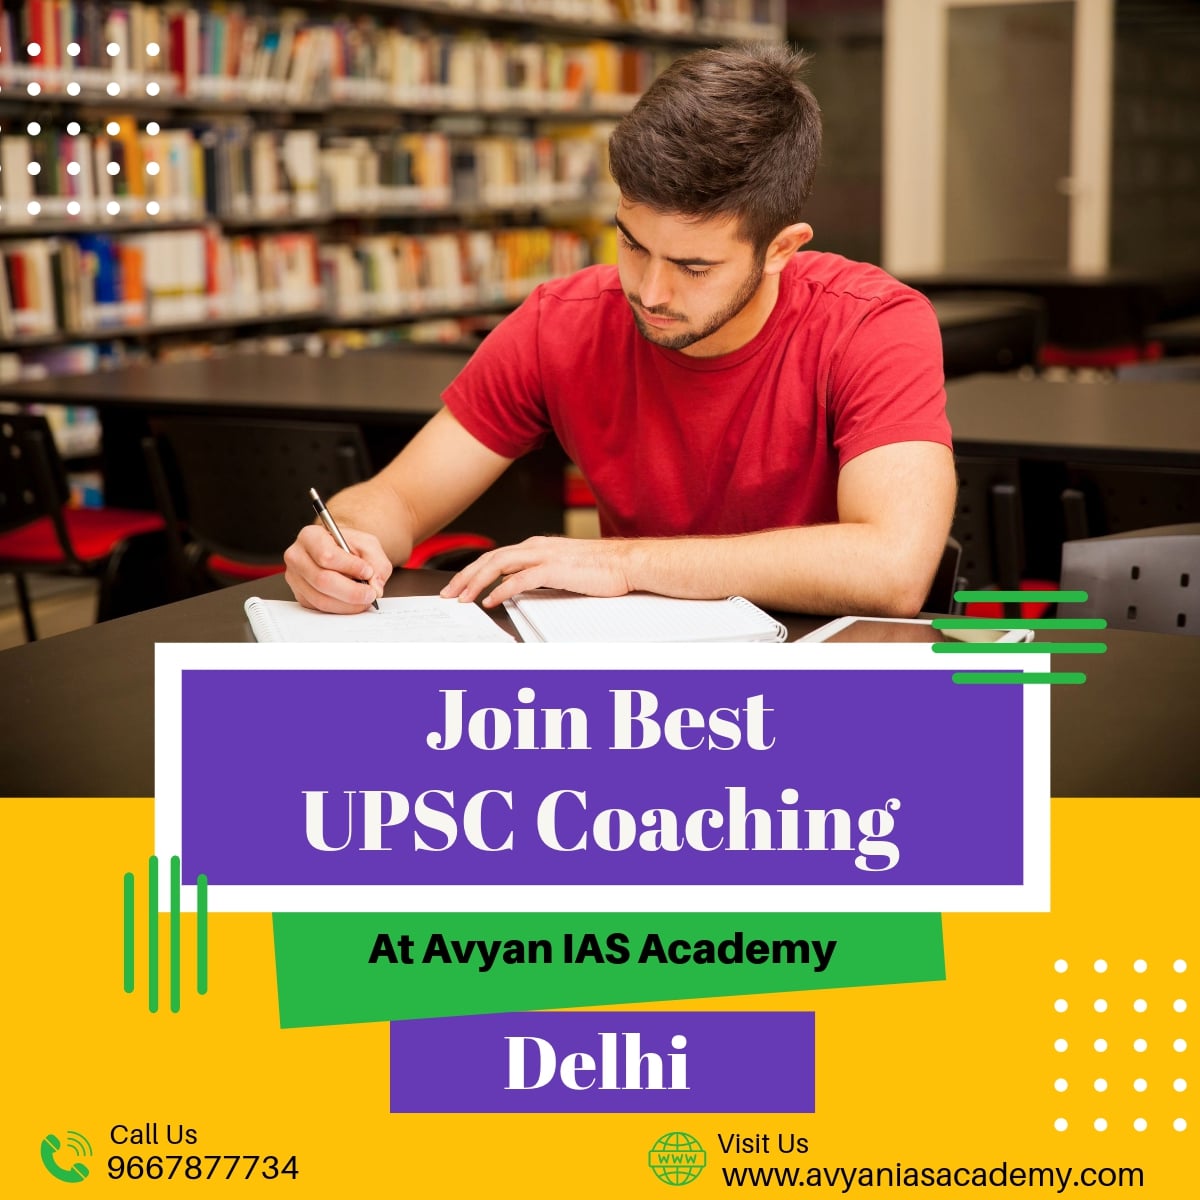 Looking Best Online UPSC Coaching In India - Adpostlive